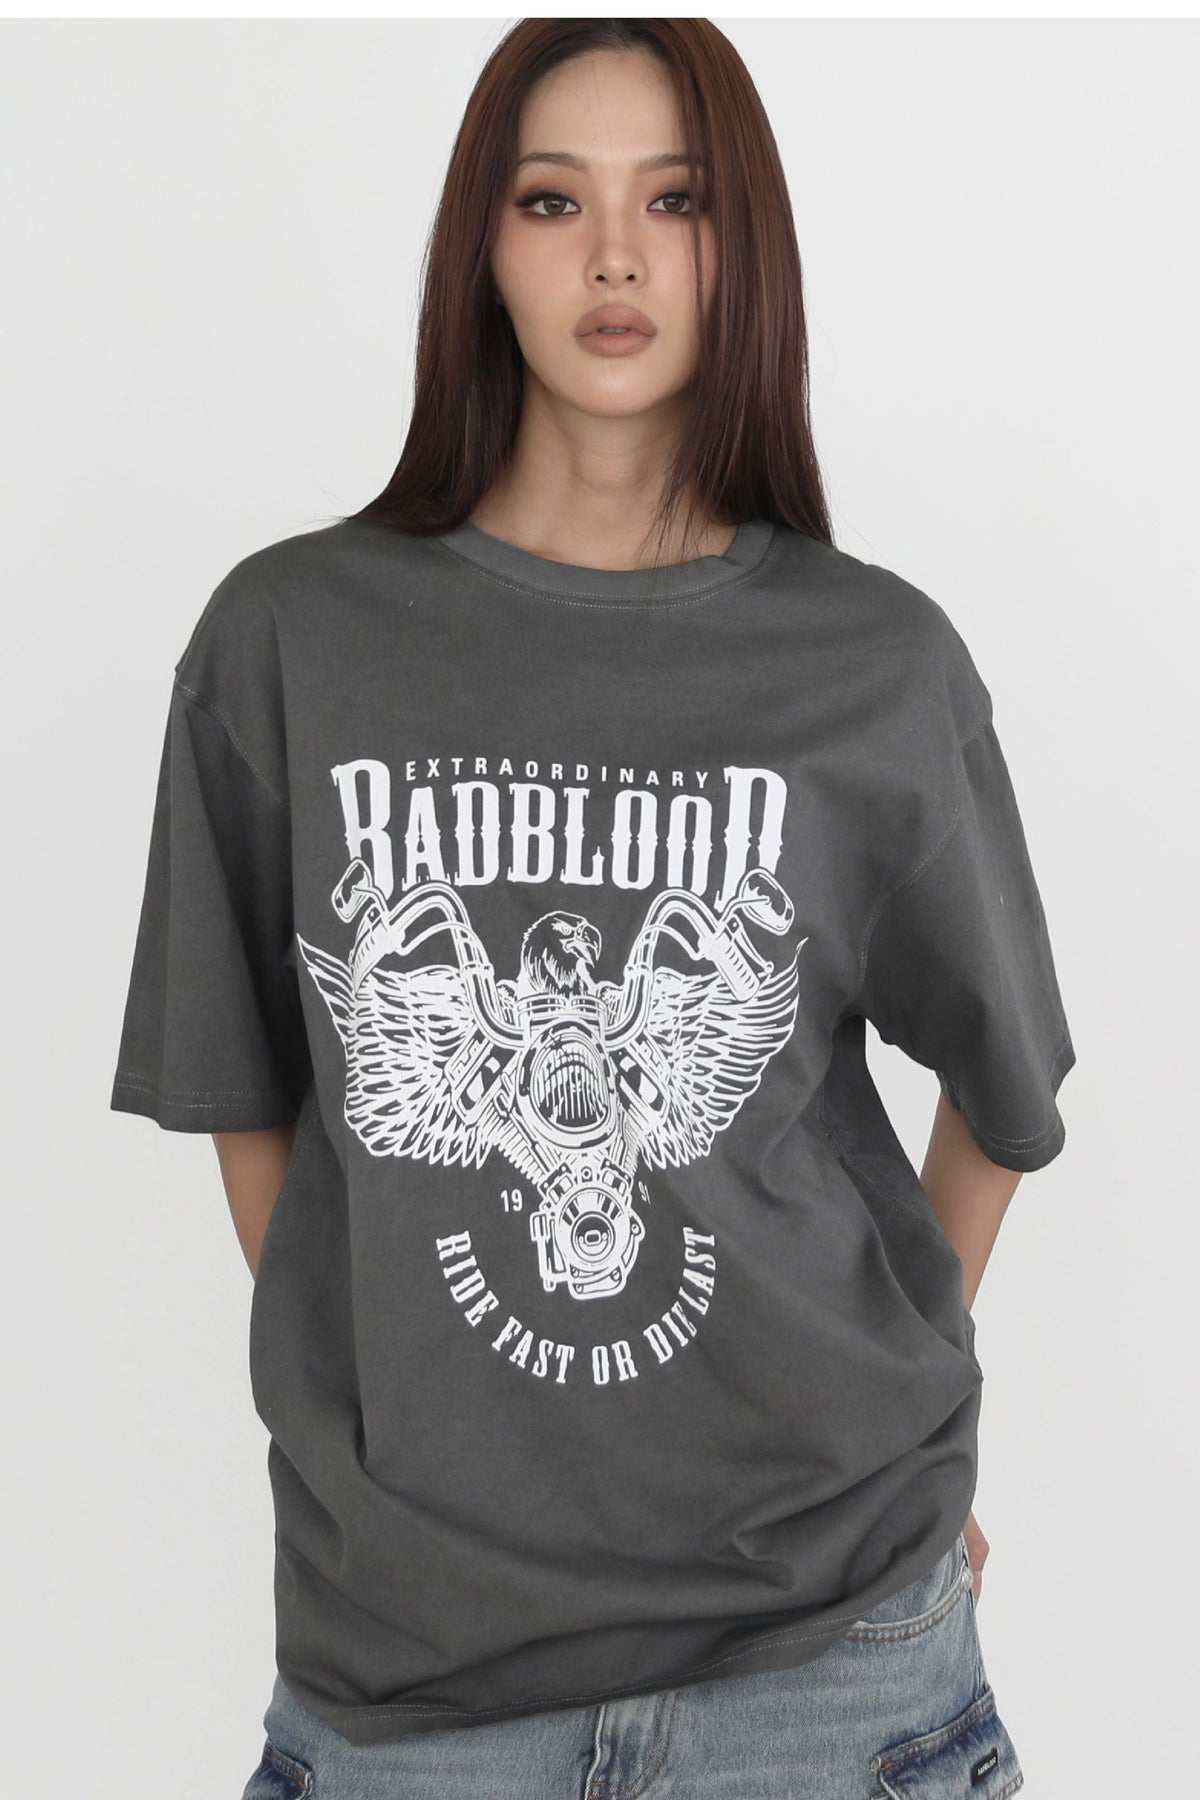 Badblood RFDL Print Vintage Short Sleeve Boxy Fit Charcoal